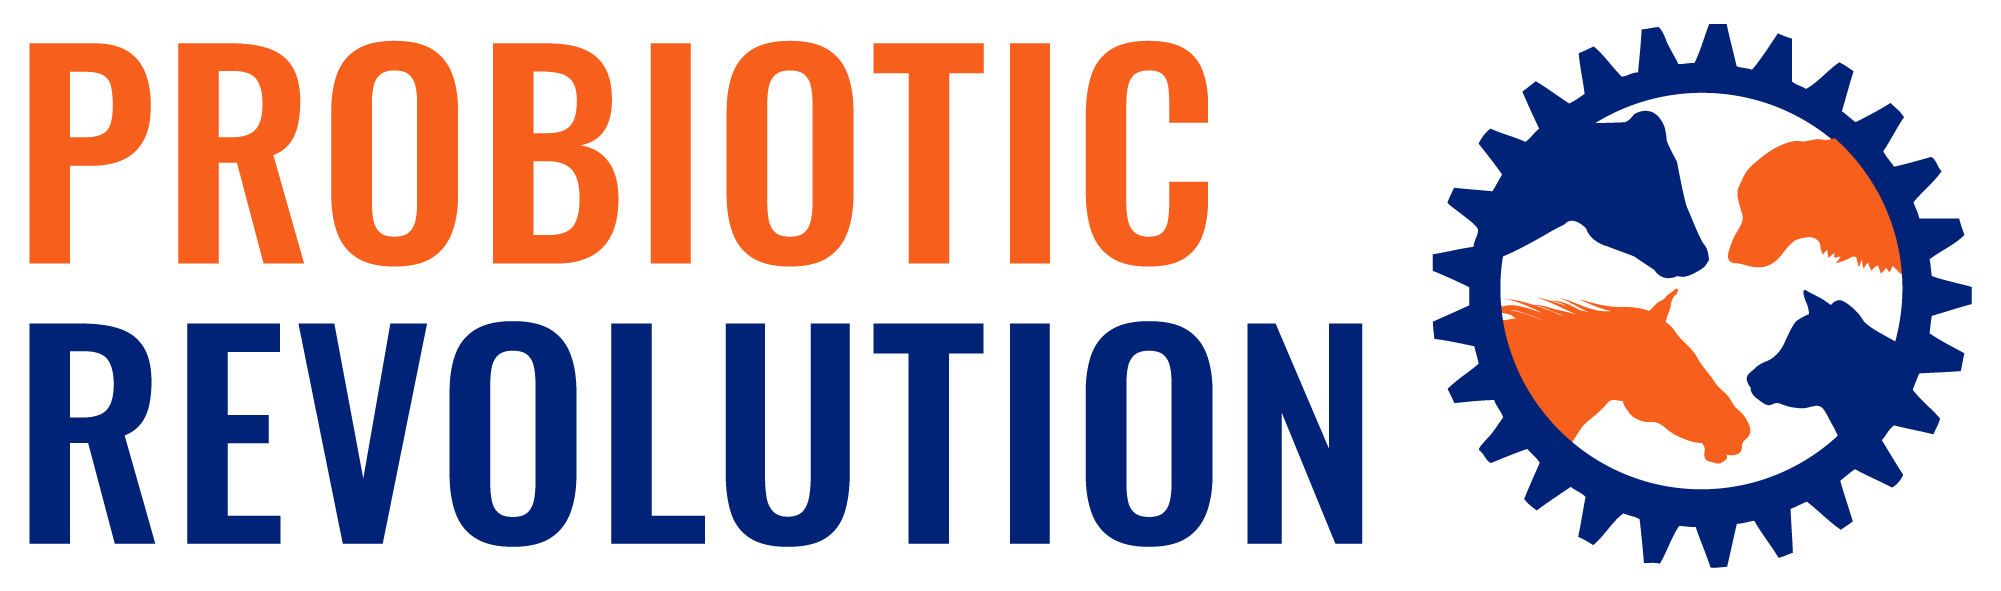 Probiotic Revolution